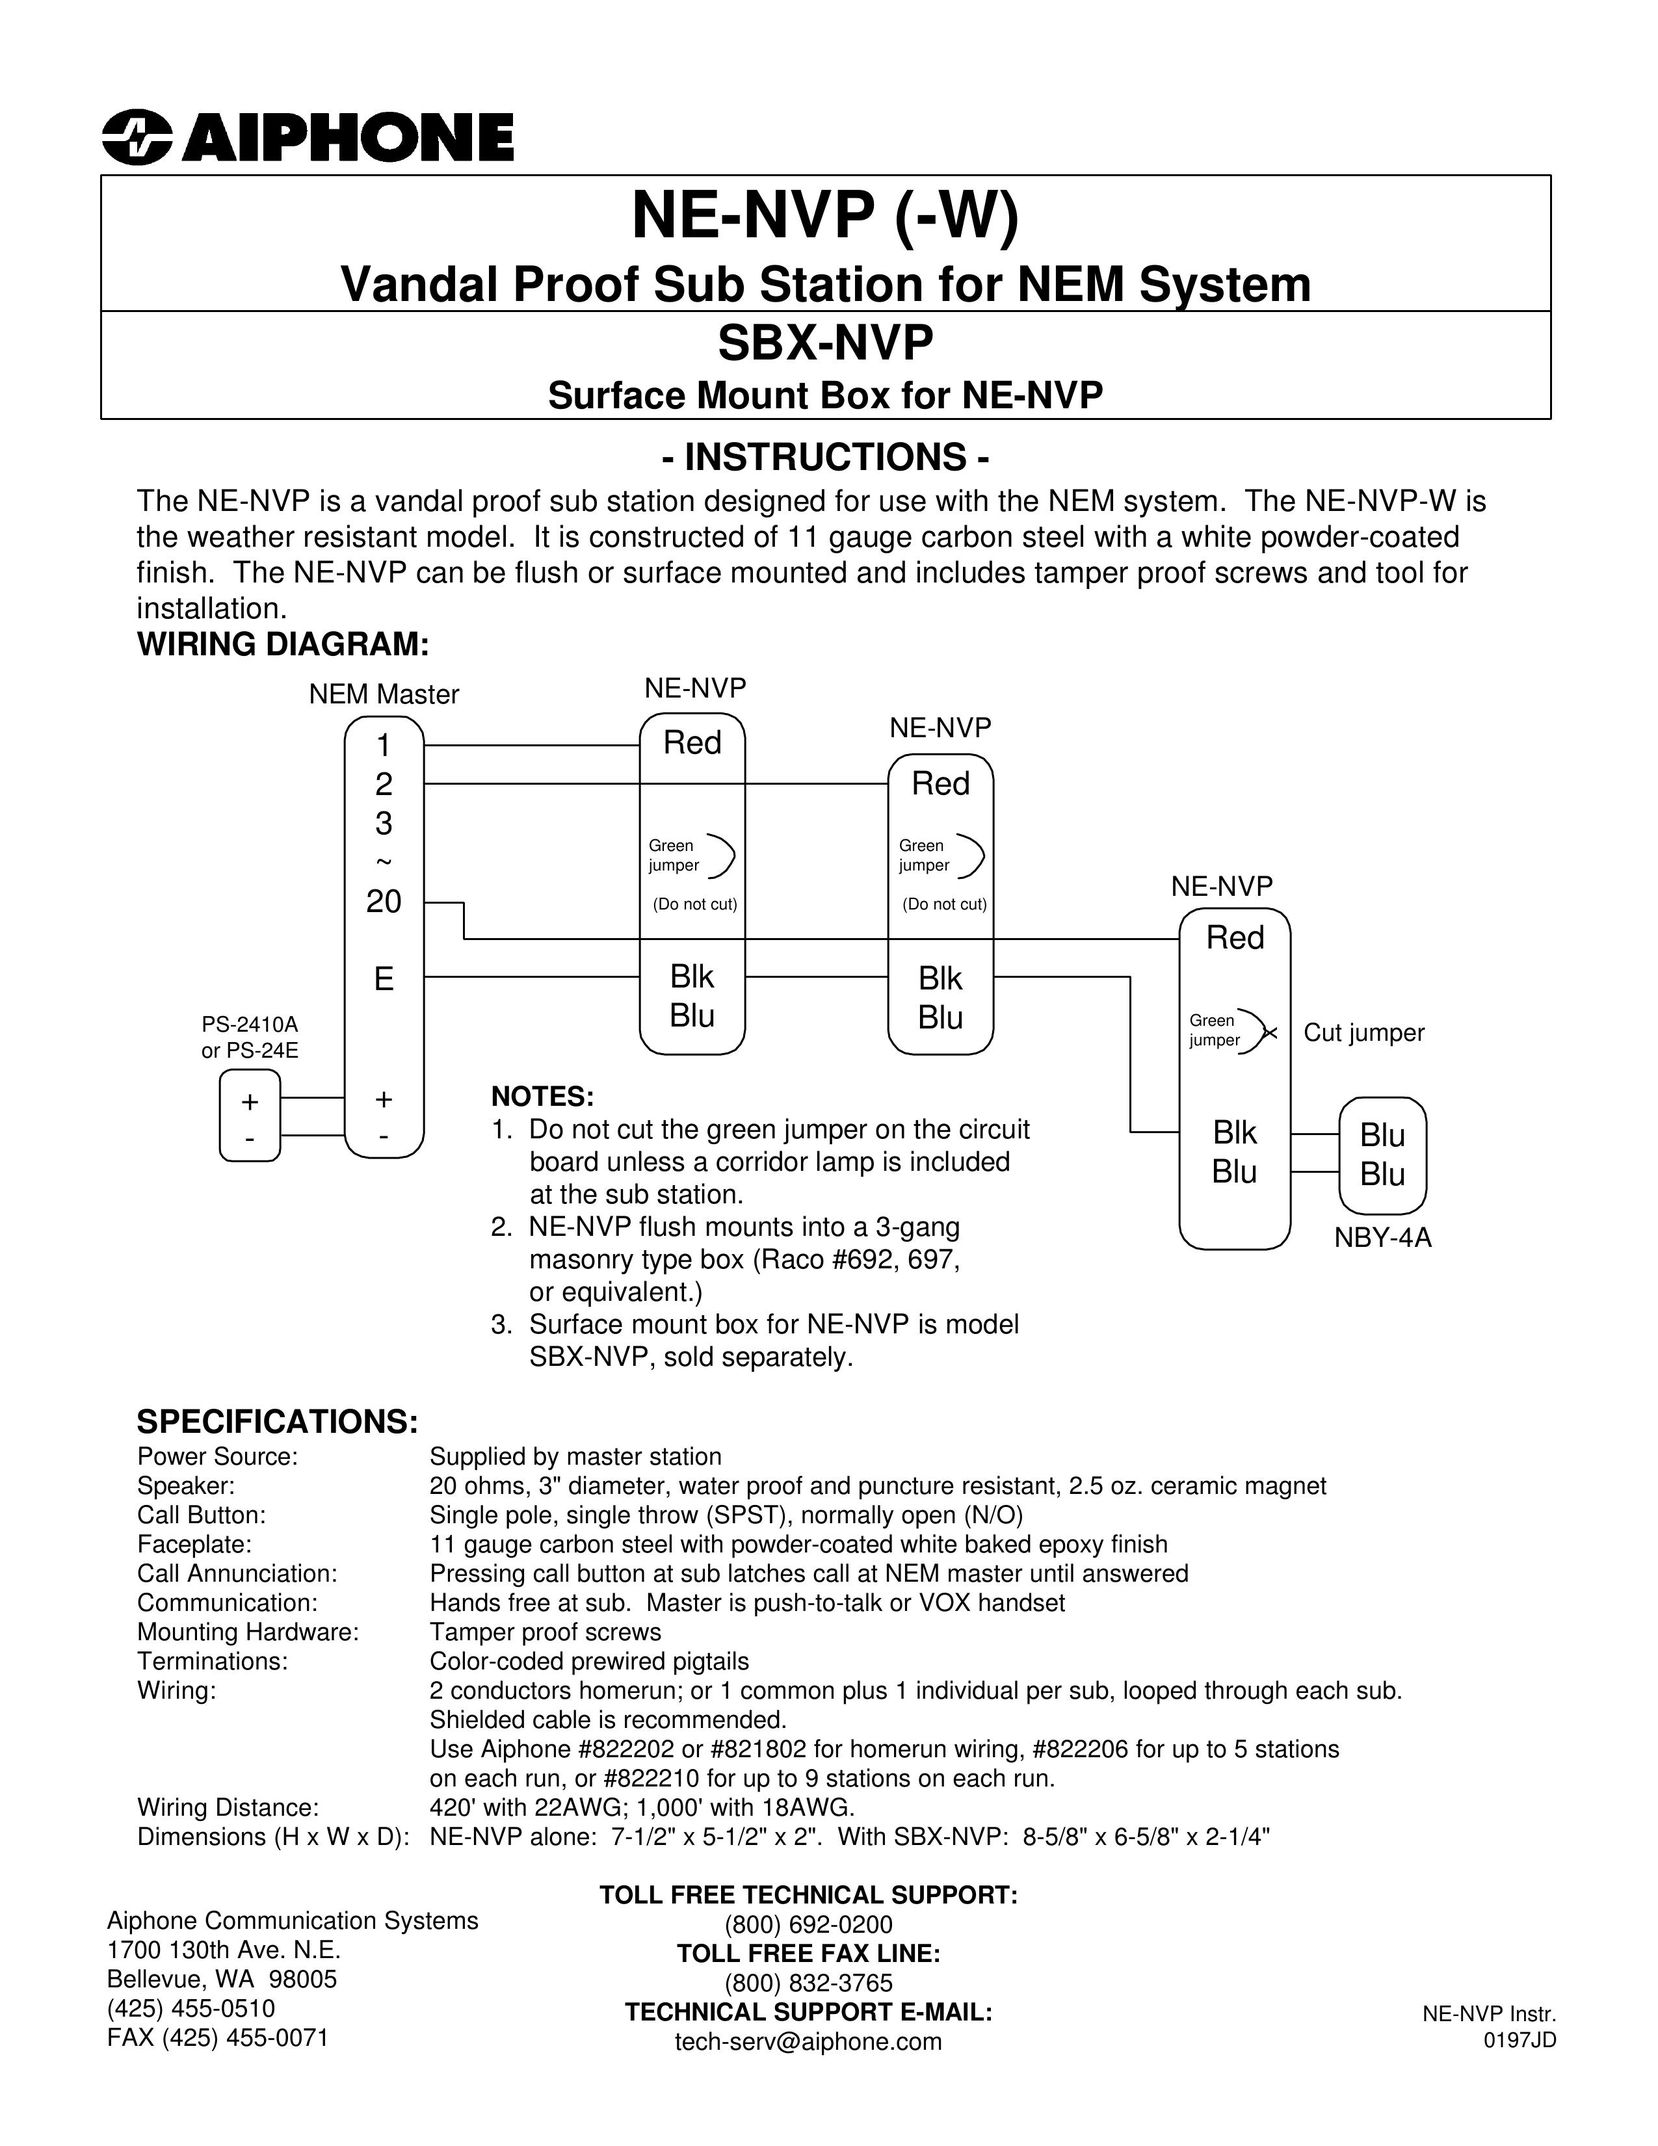 Aiphone NE-NVP (-W) Welding System User Manual